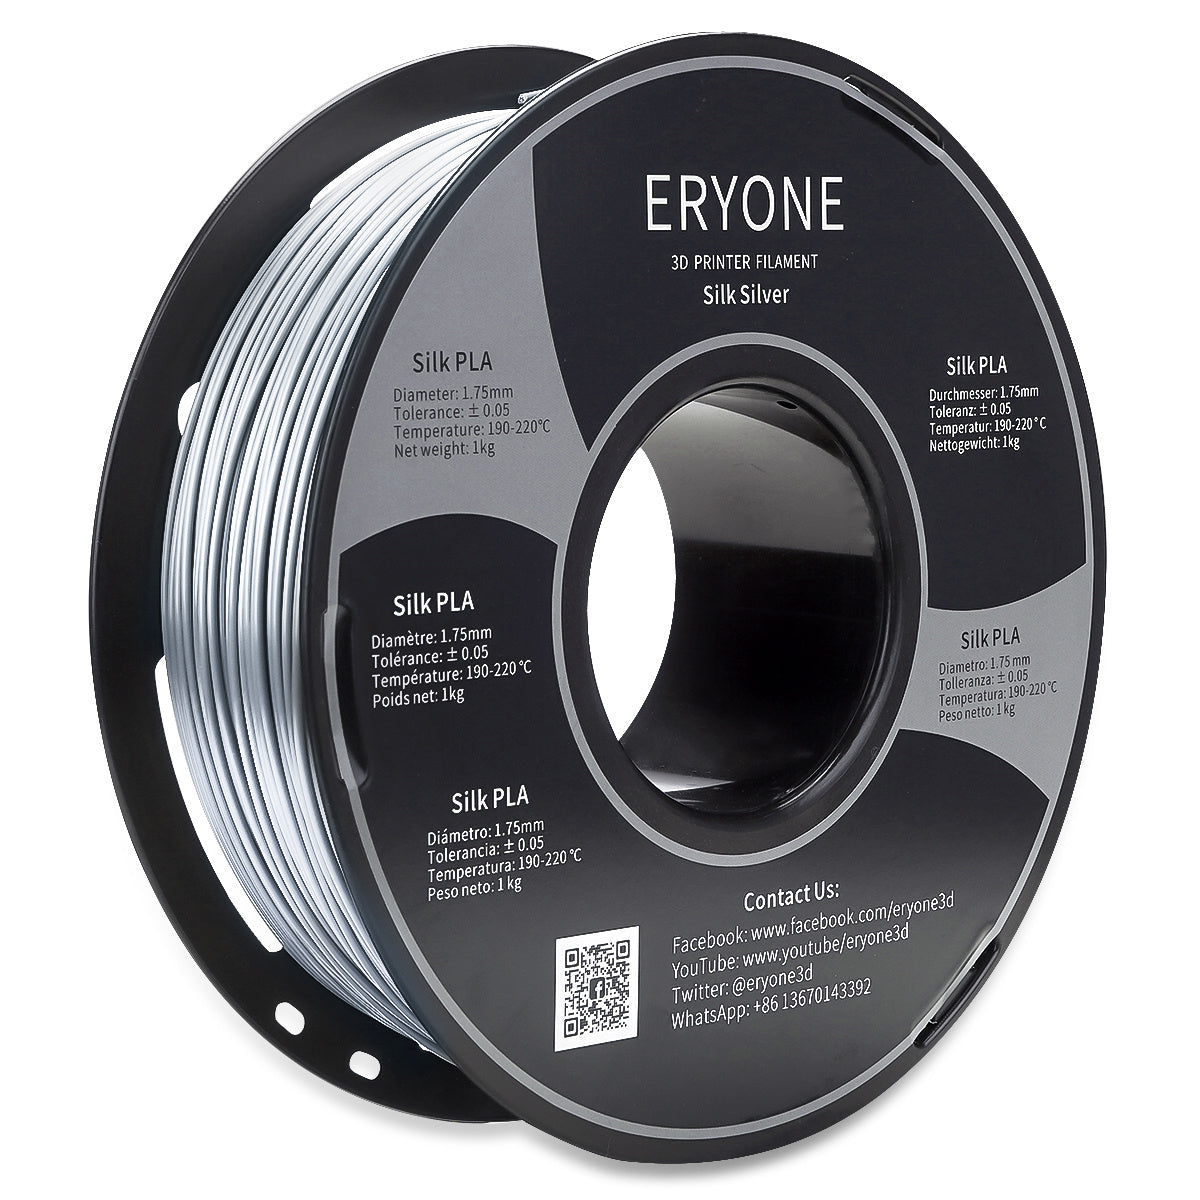 ERYONE Silk PLA Filament 1.75mm, Silky Shiny 3D Printing Material for 3D Printer and 3D Pen, 1kg 1 Spool, 1.75mm